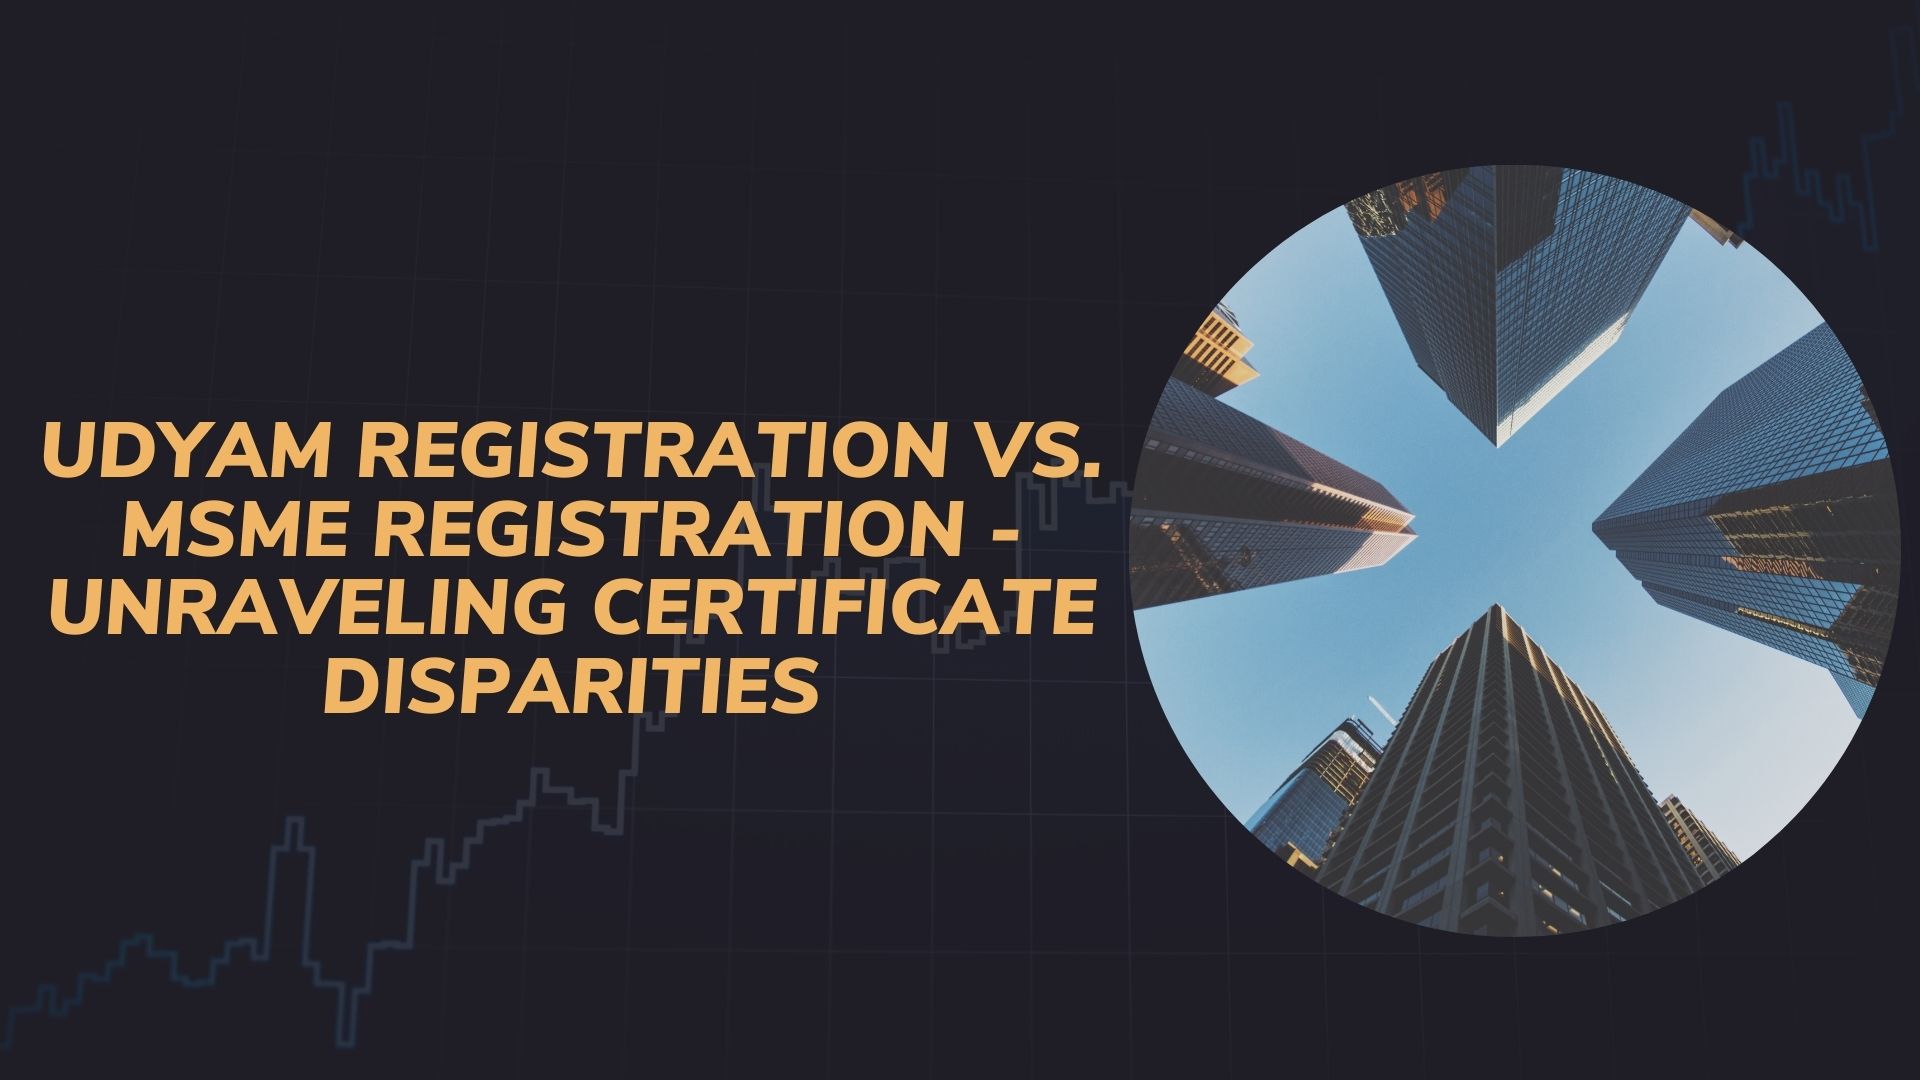 Udyam Registration vs. MSME Registration - Unraveling Certificate Disparities